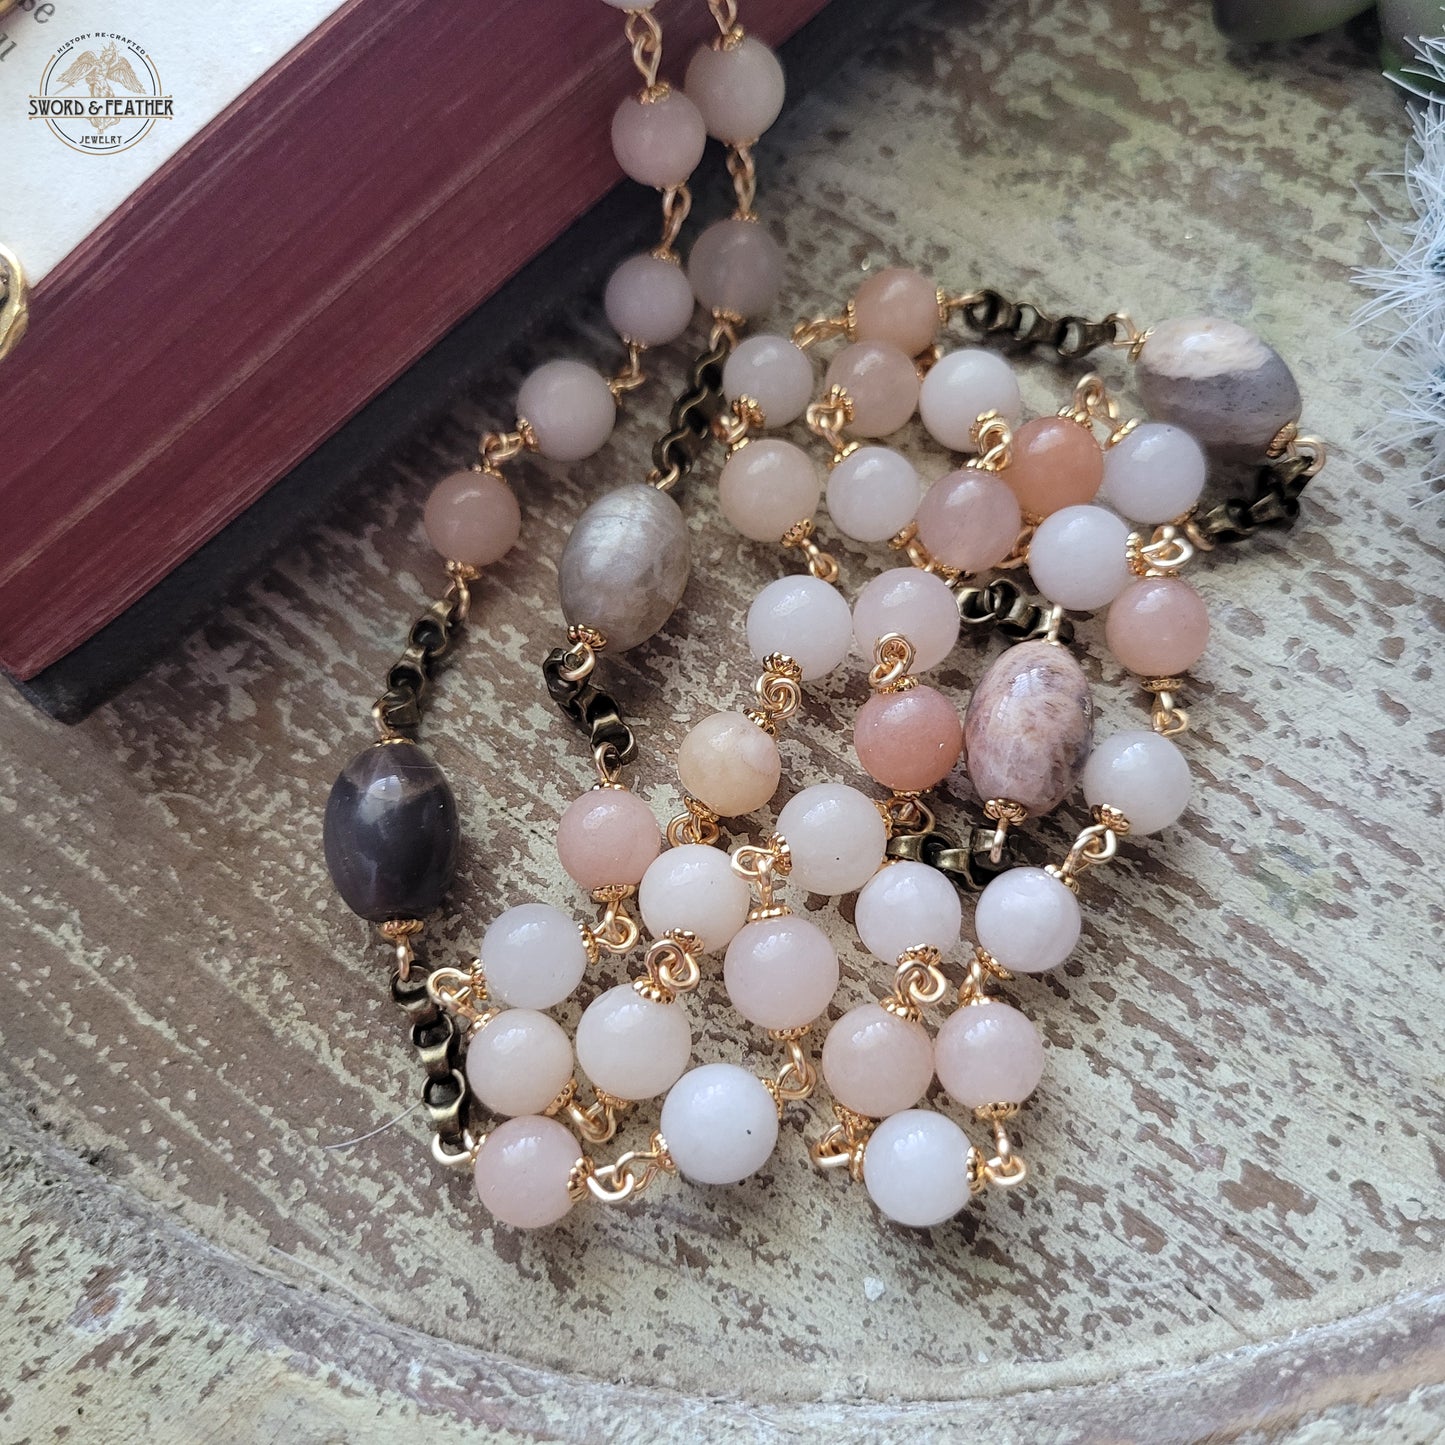 Peach Moonstone Rosary Beads